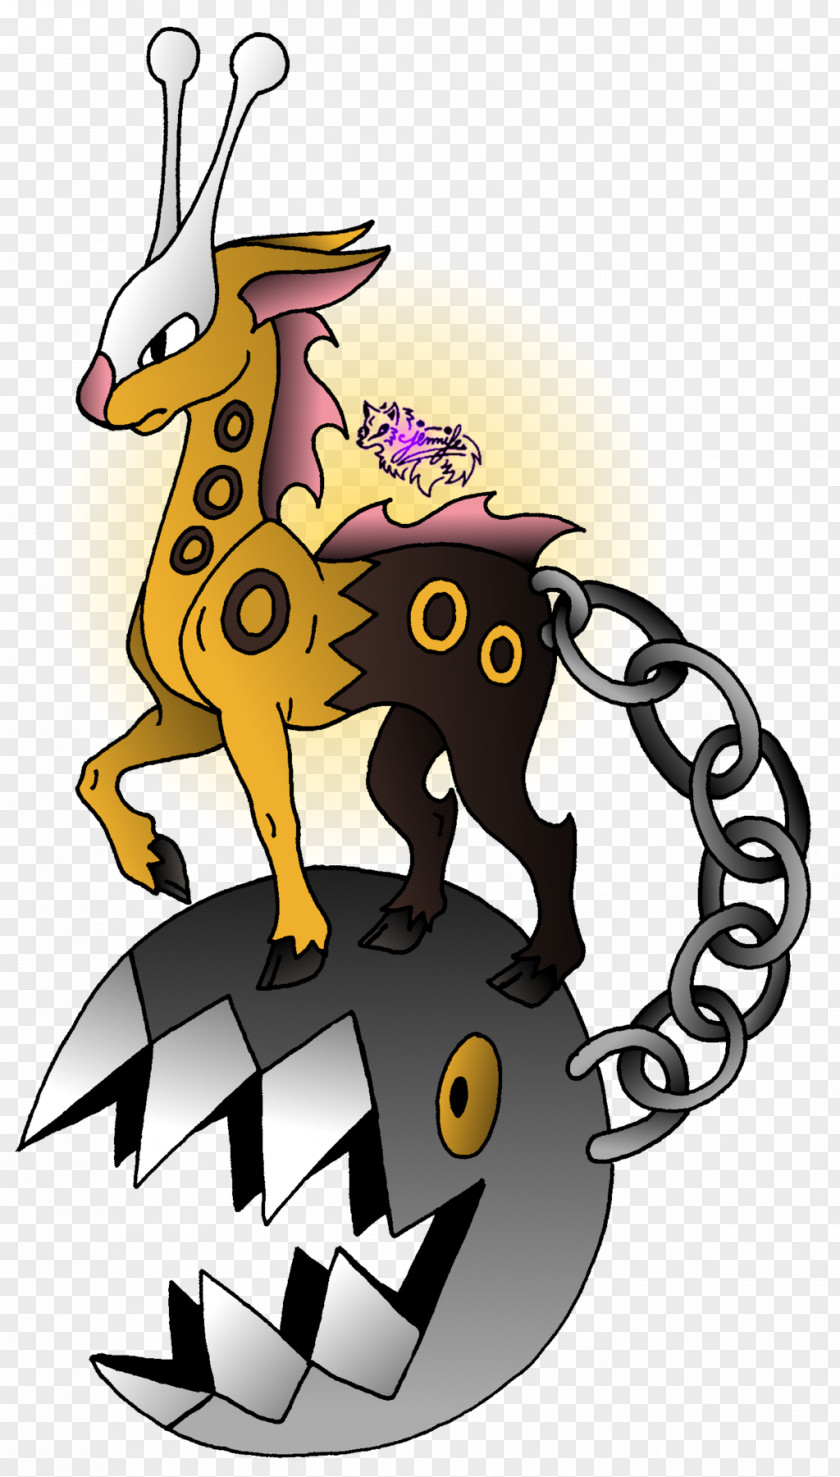 Pokmon Pokémon Girafarig Groudon DeviantArt Evolution PNG